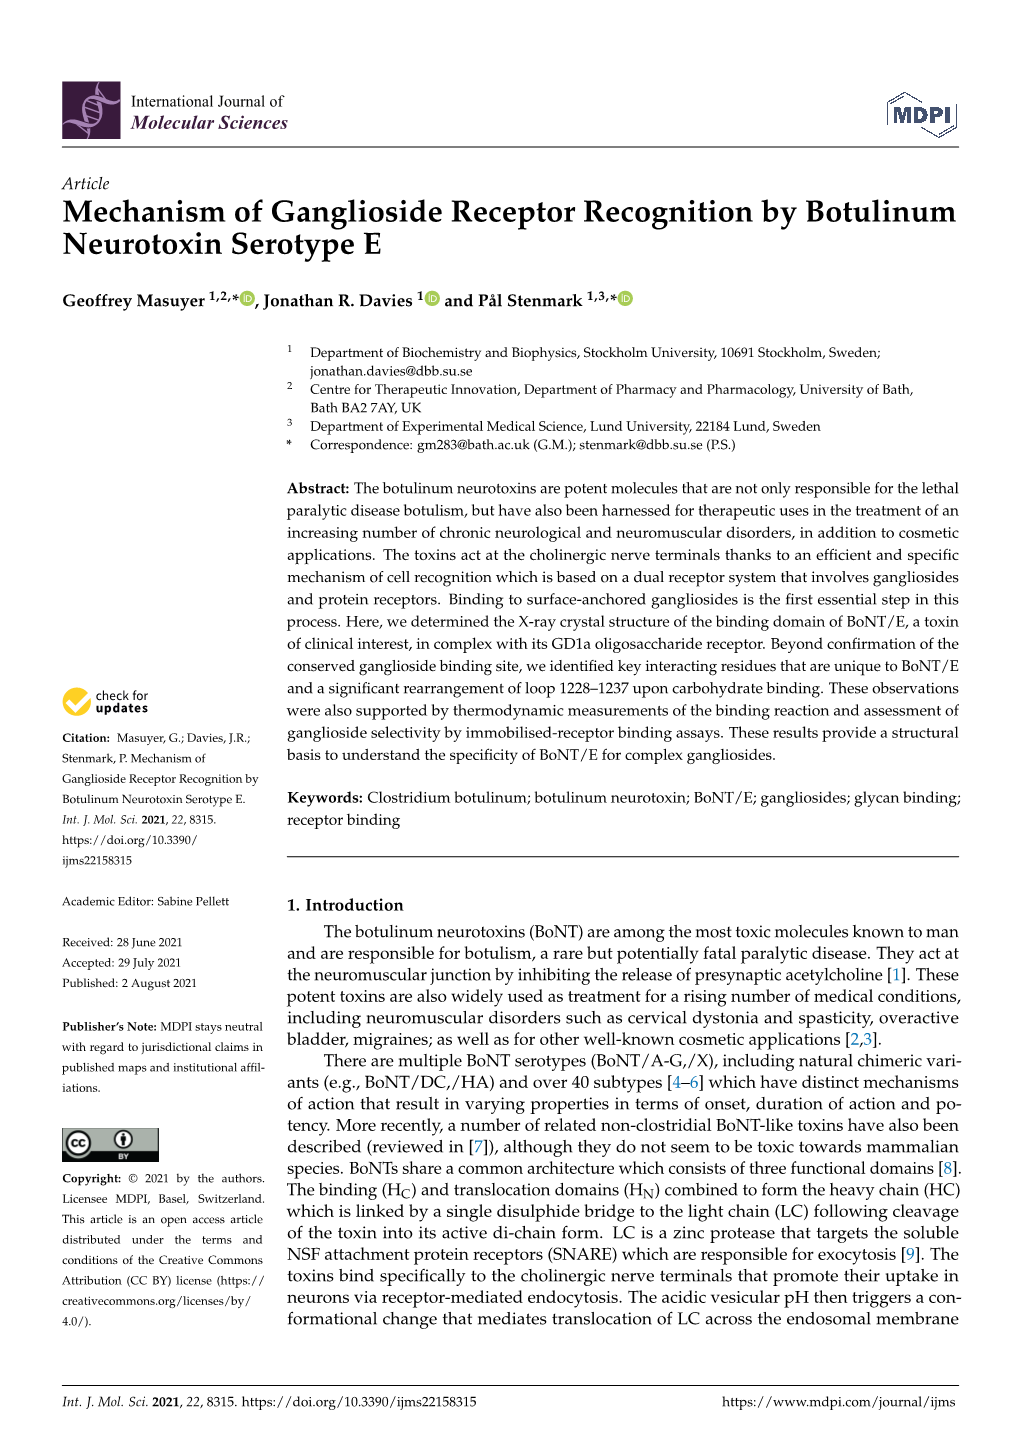 Mechanism of Ganglioside Receptor Recognition by Botulinum Neurotoxin Serotype E